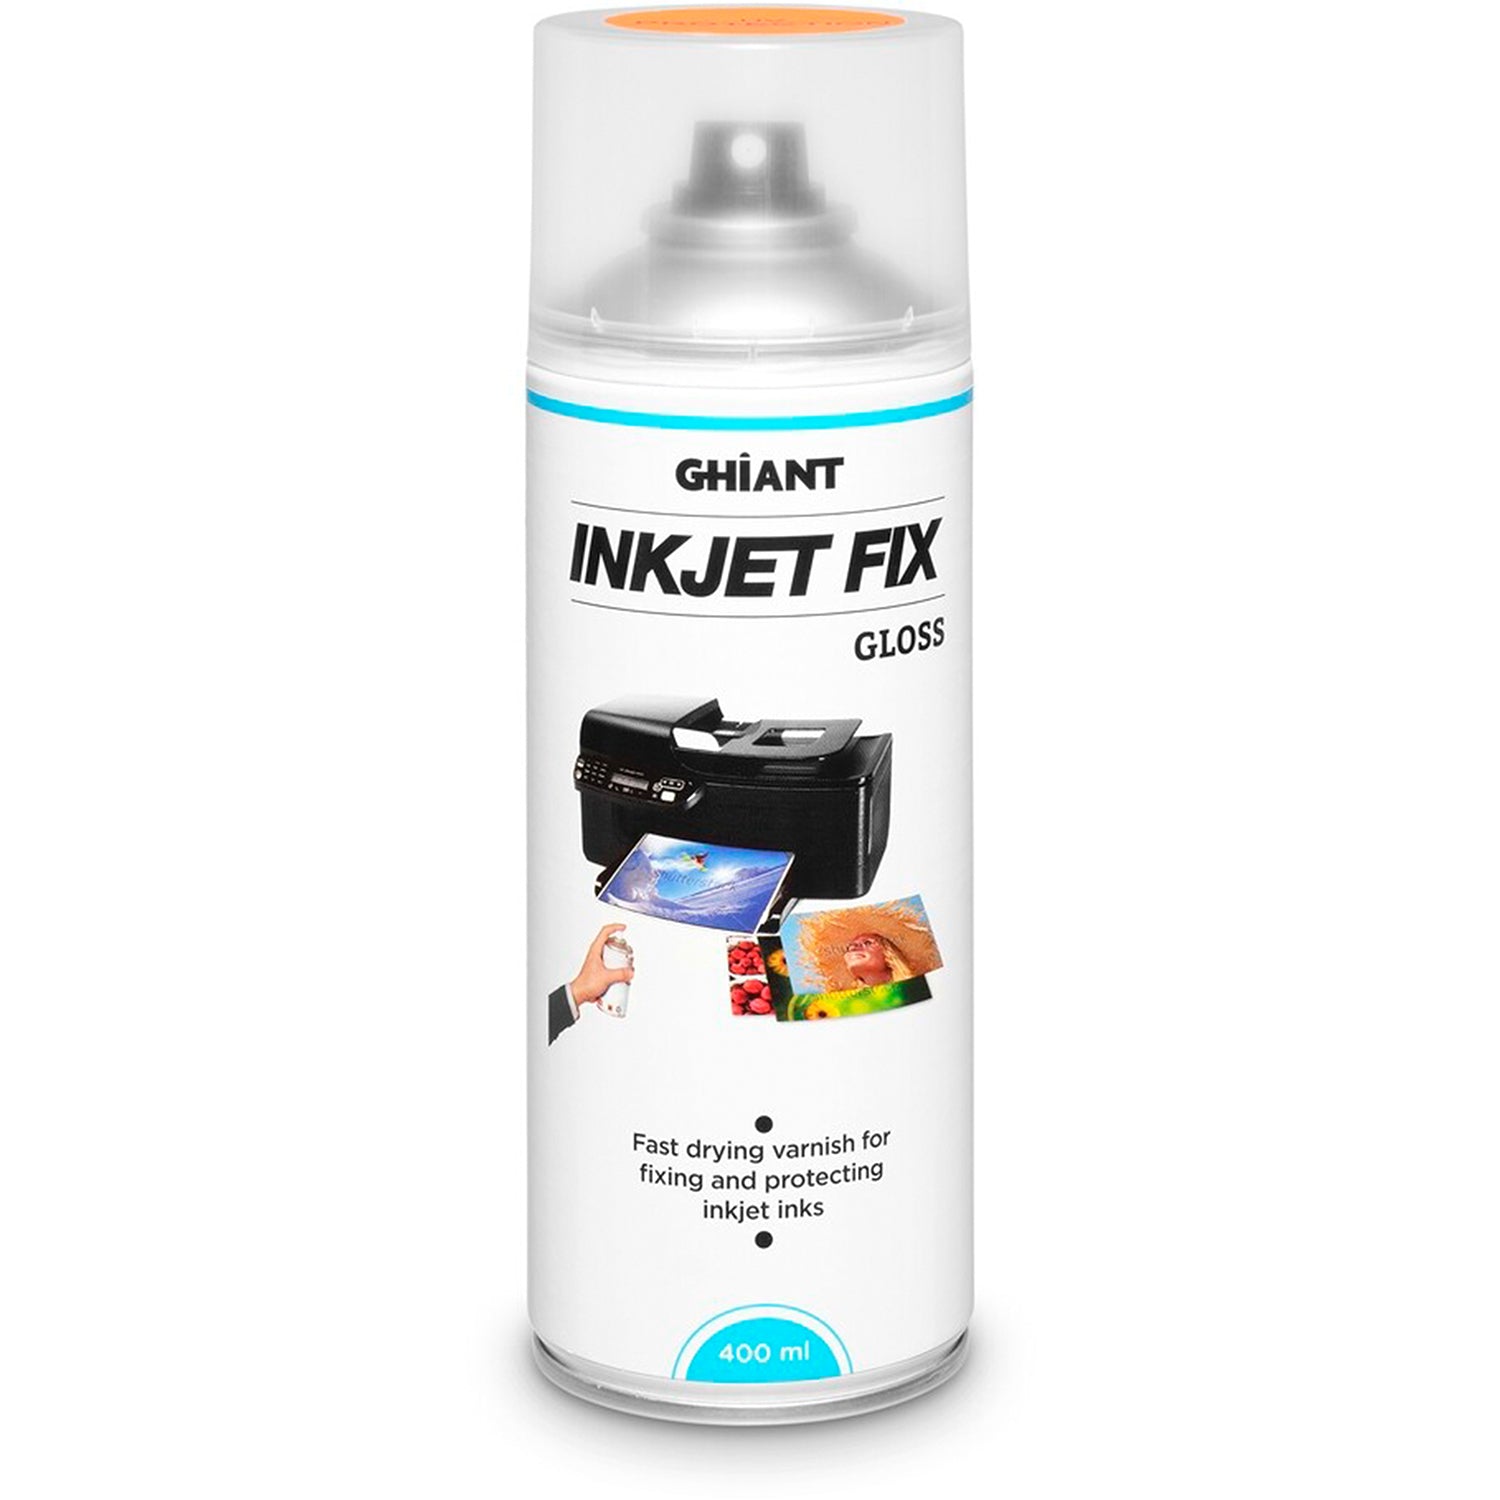 Ghiant INKJET FIX 400ml Glossy Fixative Spray for Inkjet Papers